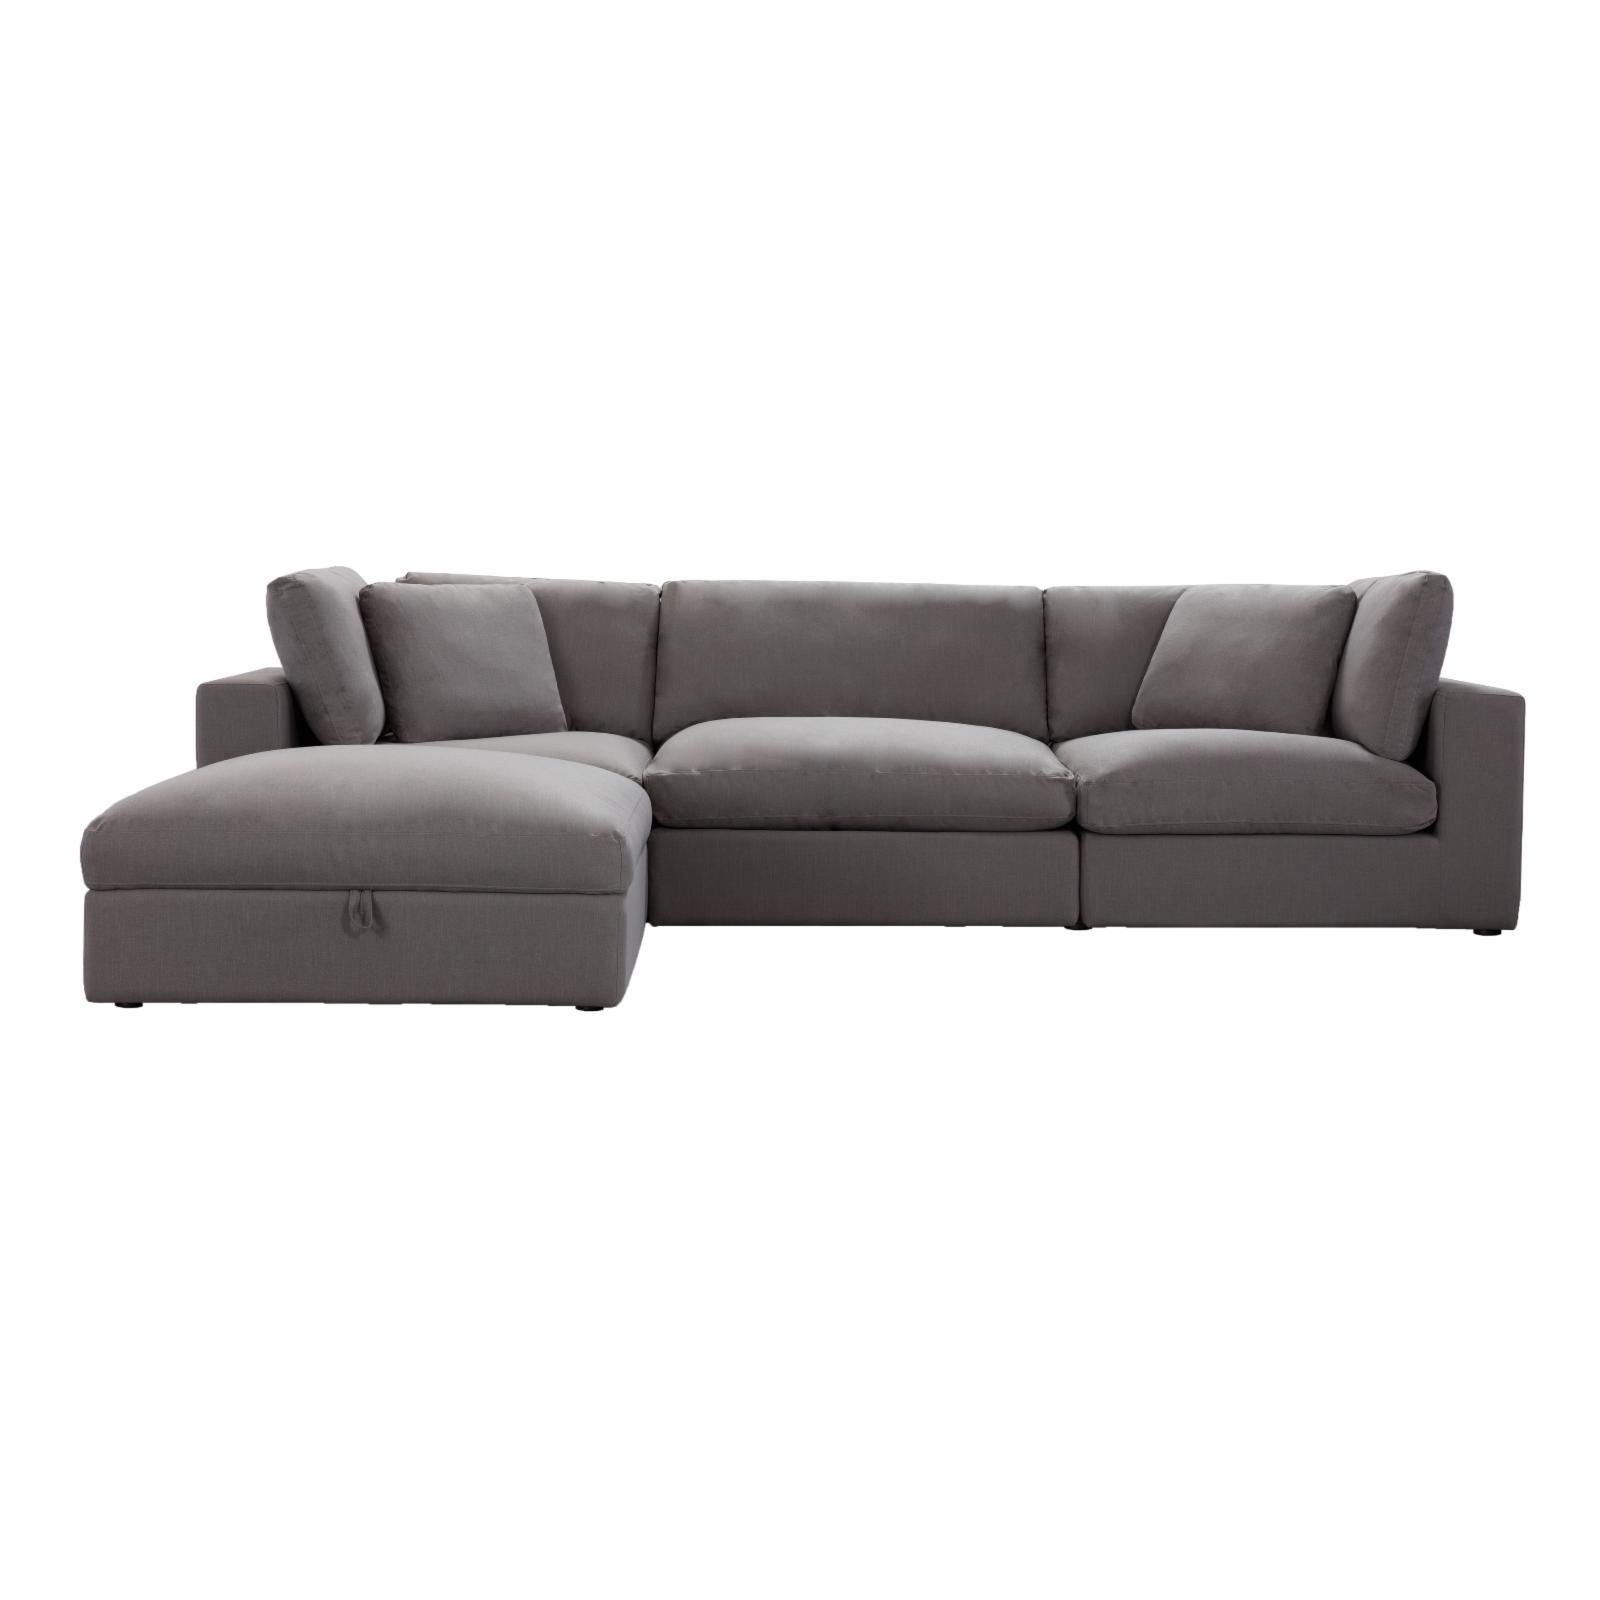 Roundhill Furniture Rivas Contemporary 4-Piece Sectional Sofa - Graphite - image 1 of 9